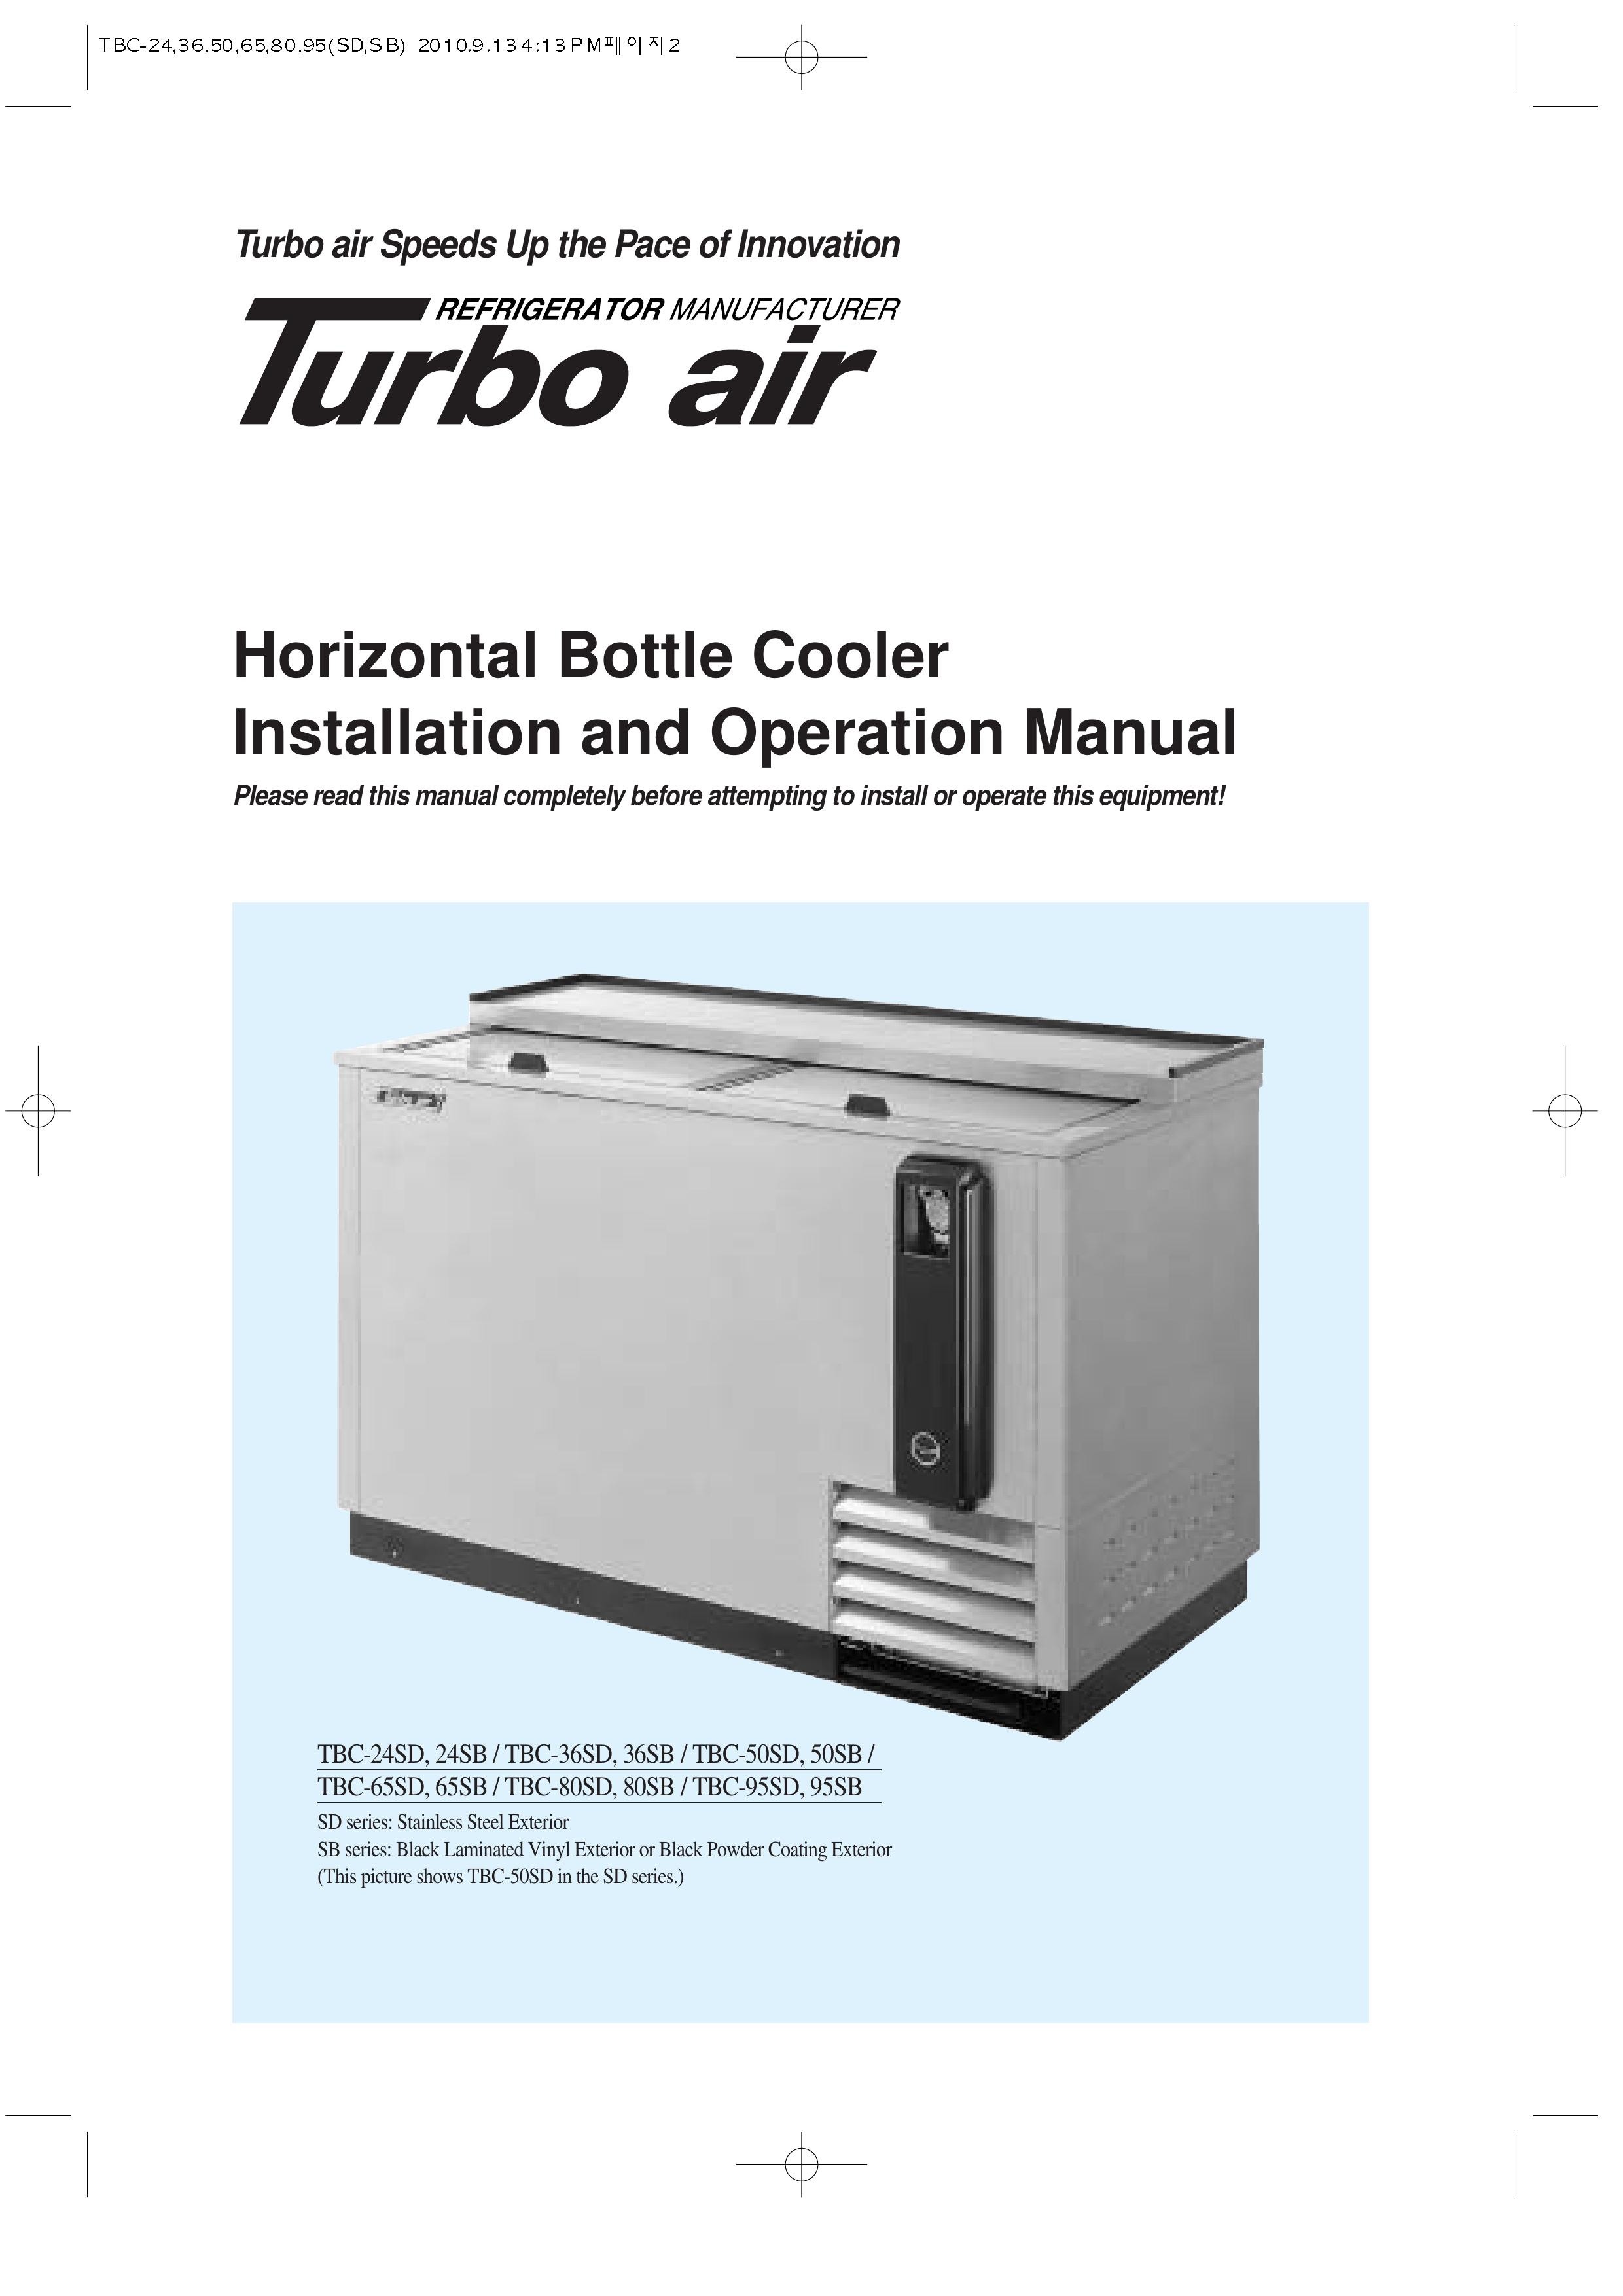 Turbo Air TBC-50SD, 50SB Refrigerator User Manual